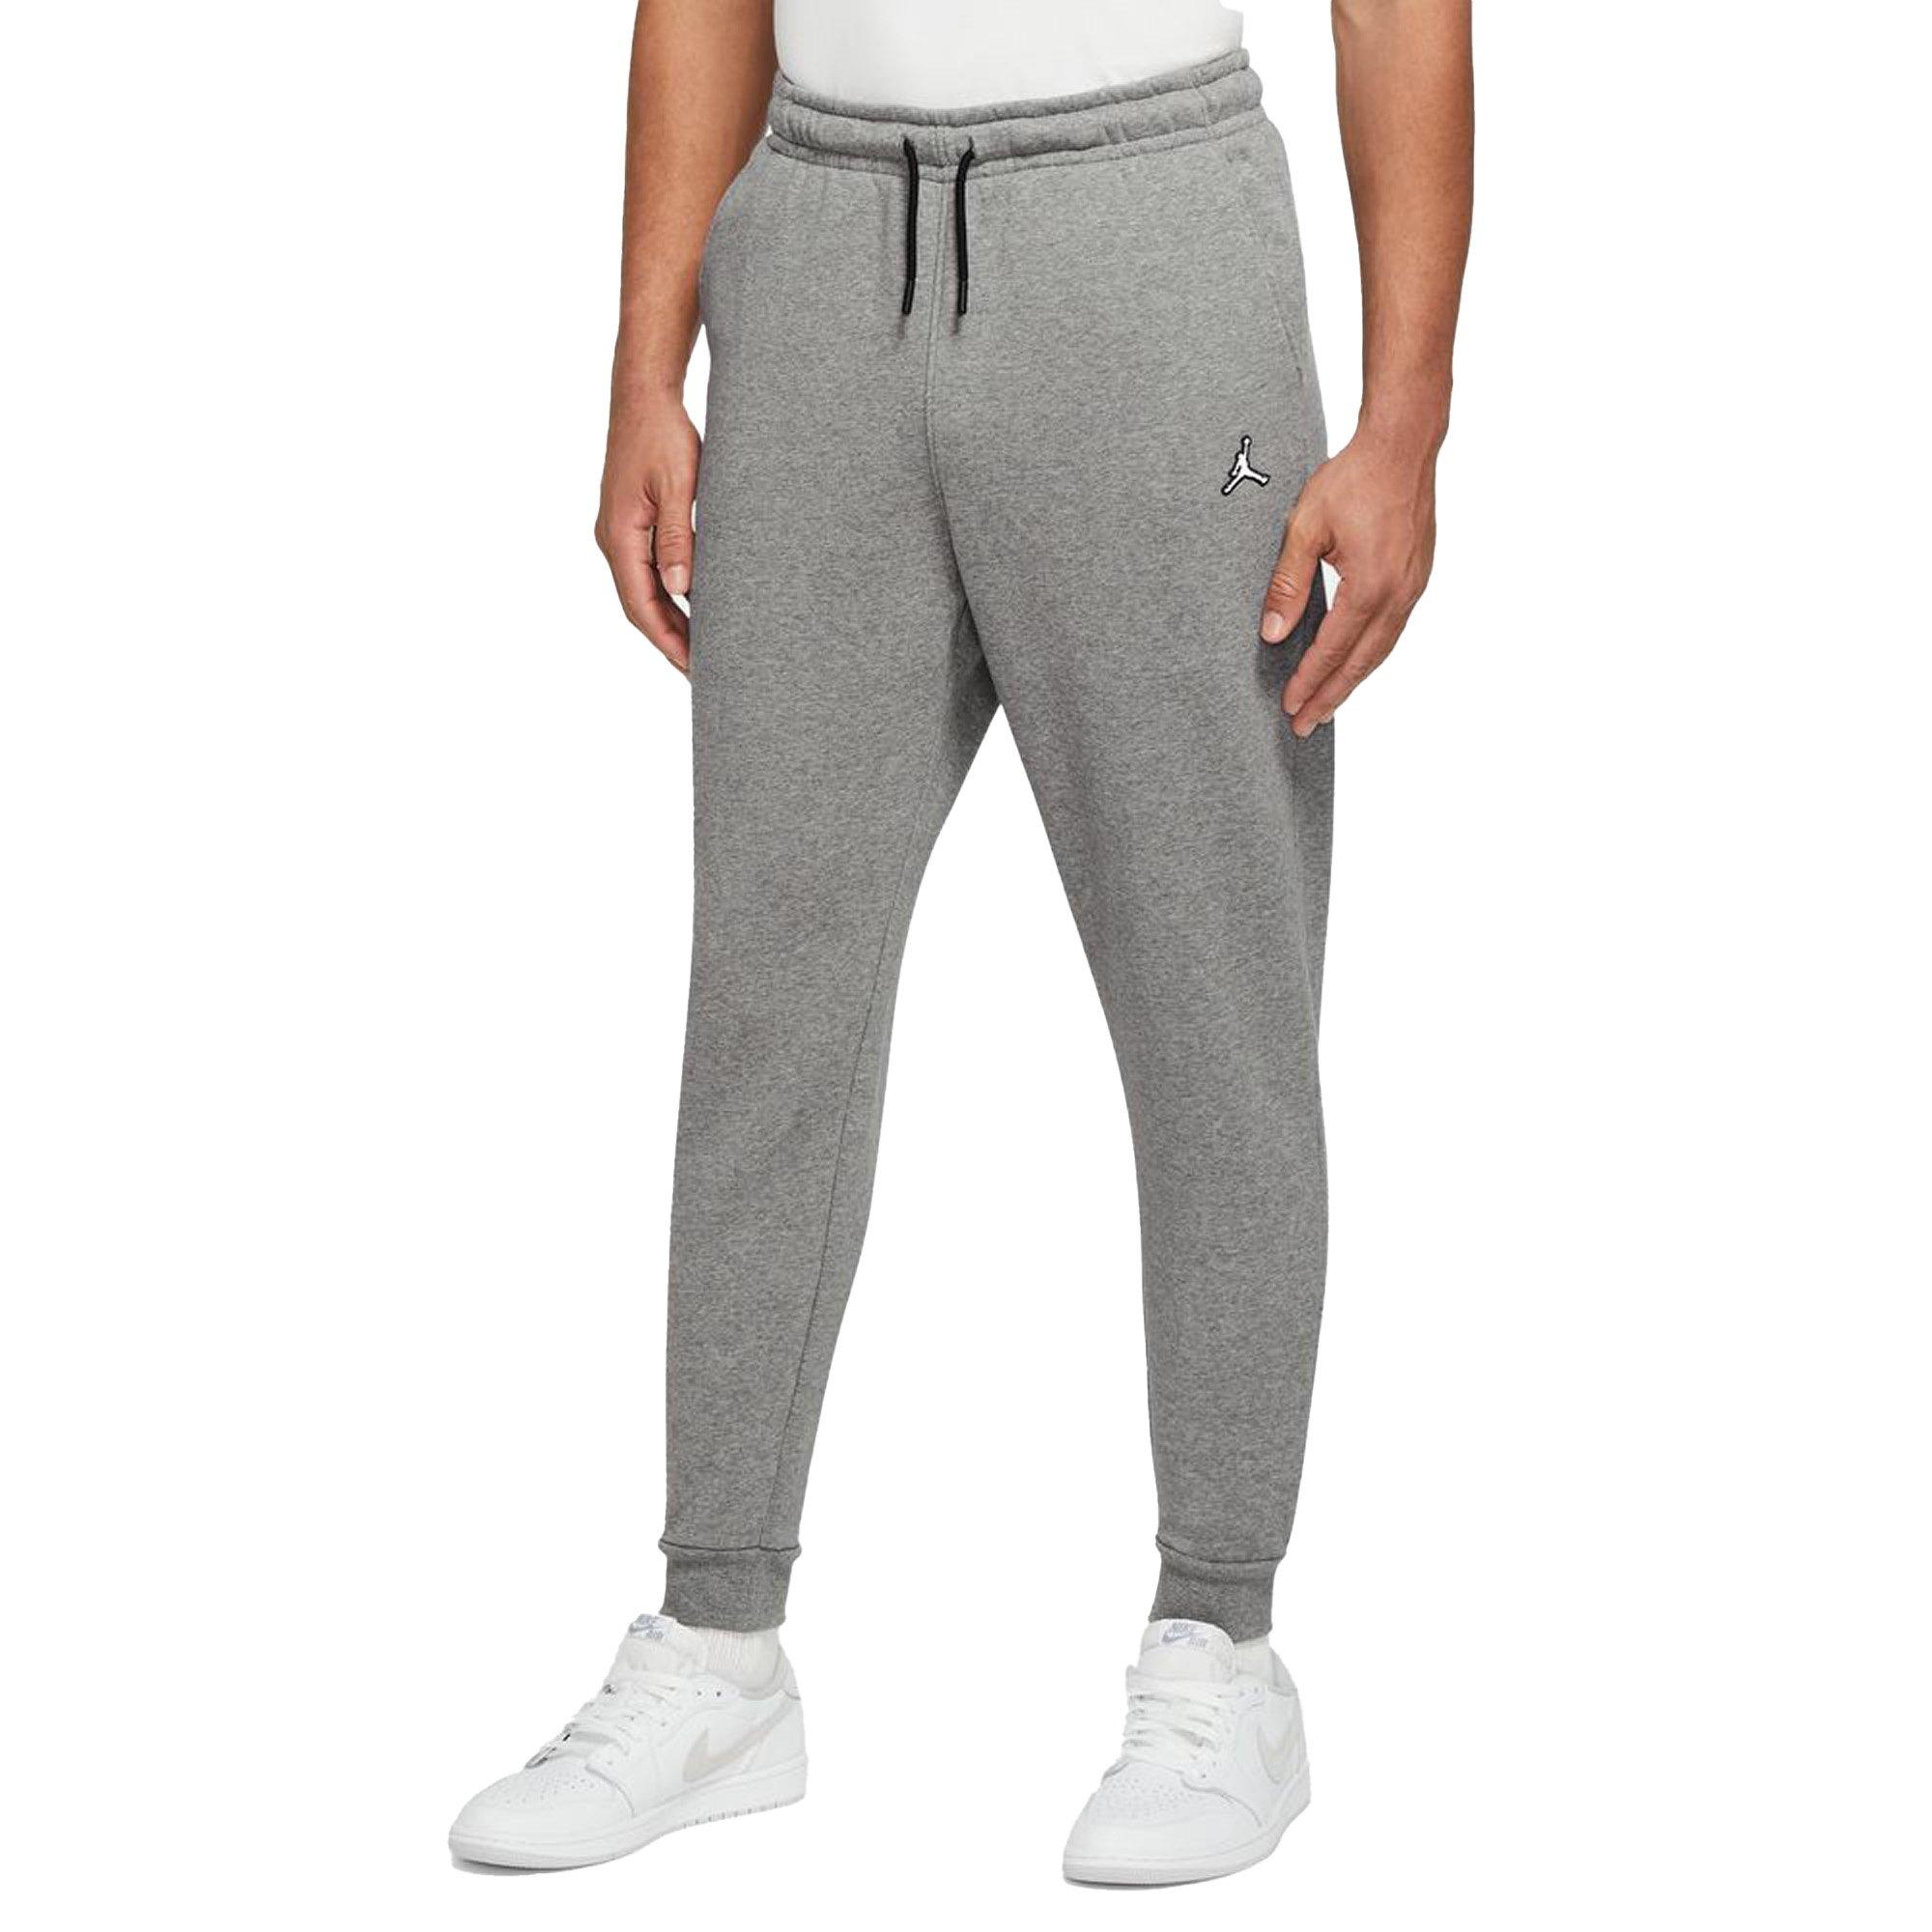 Essential Fleece Pants Mens Pants (Grey)